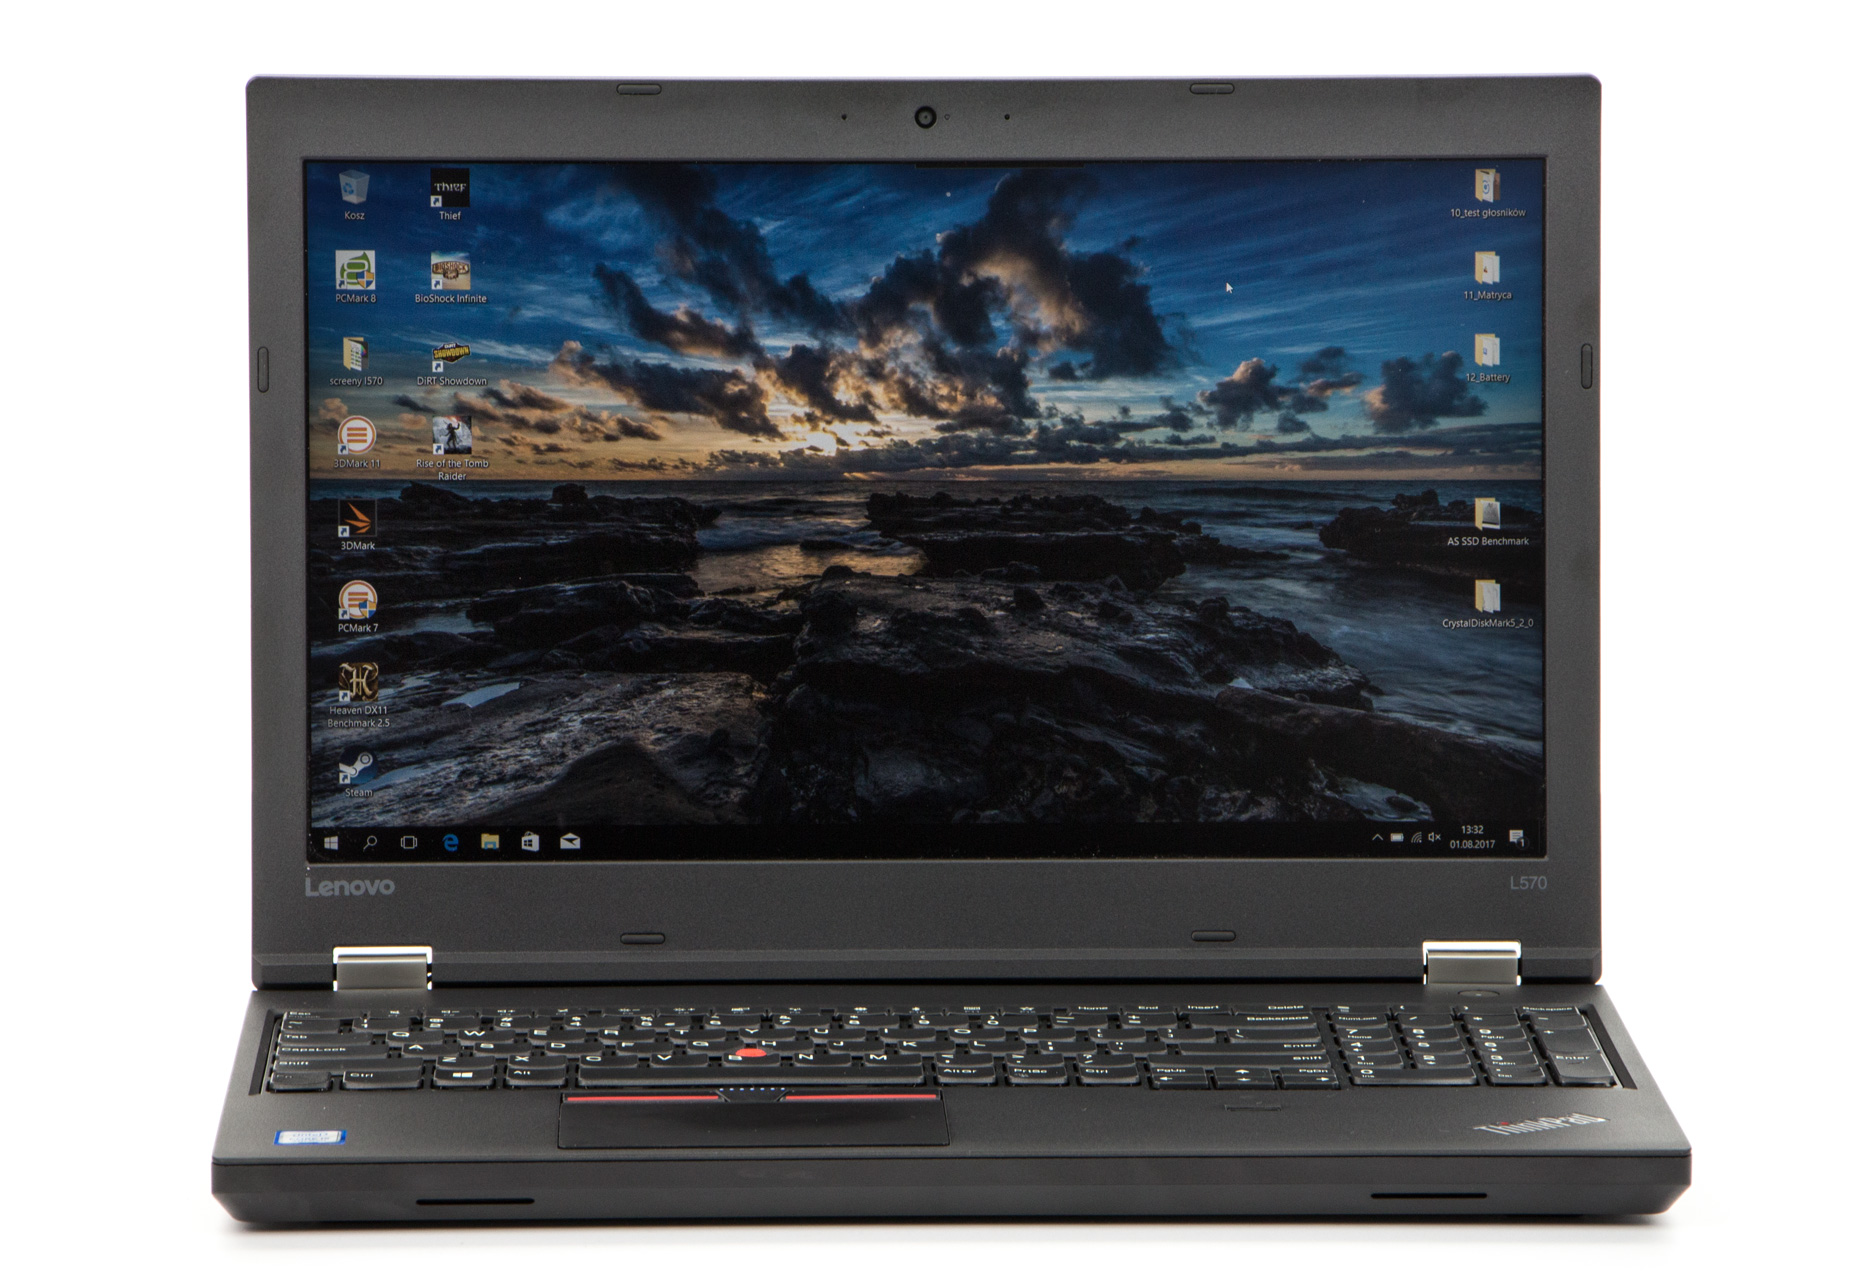 Lenovo ThinkPad L570 - test